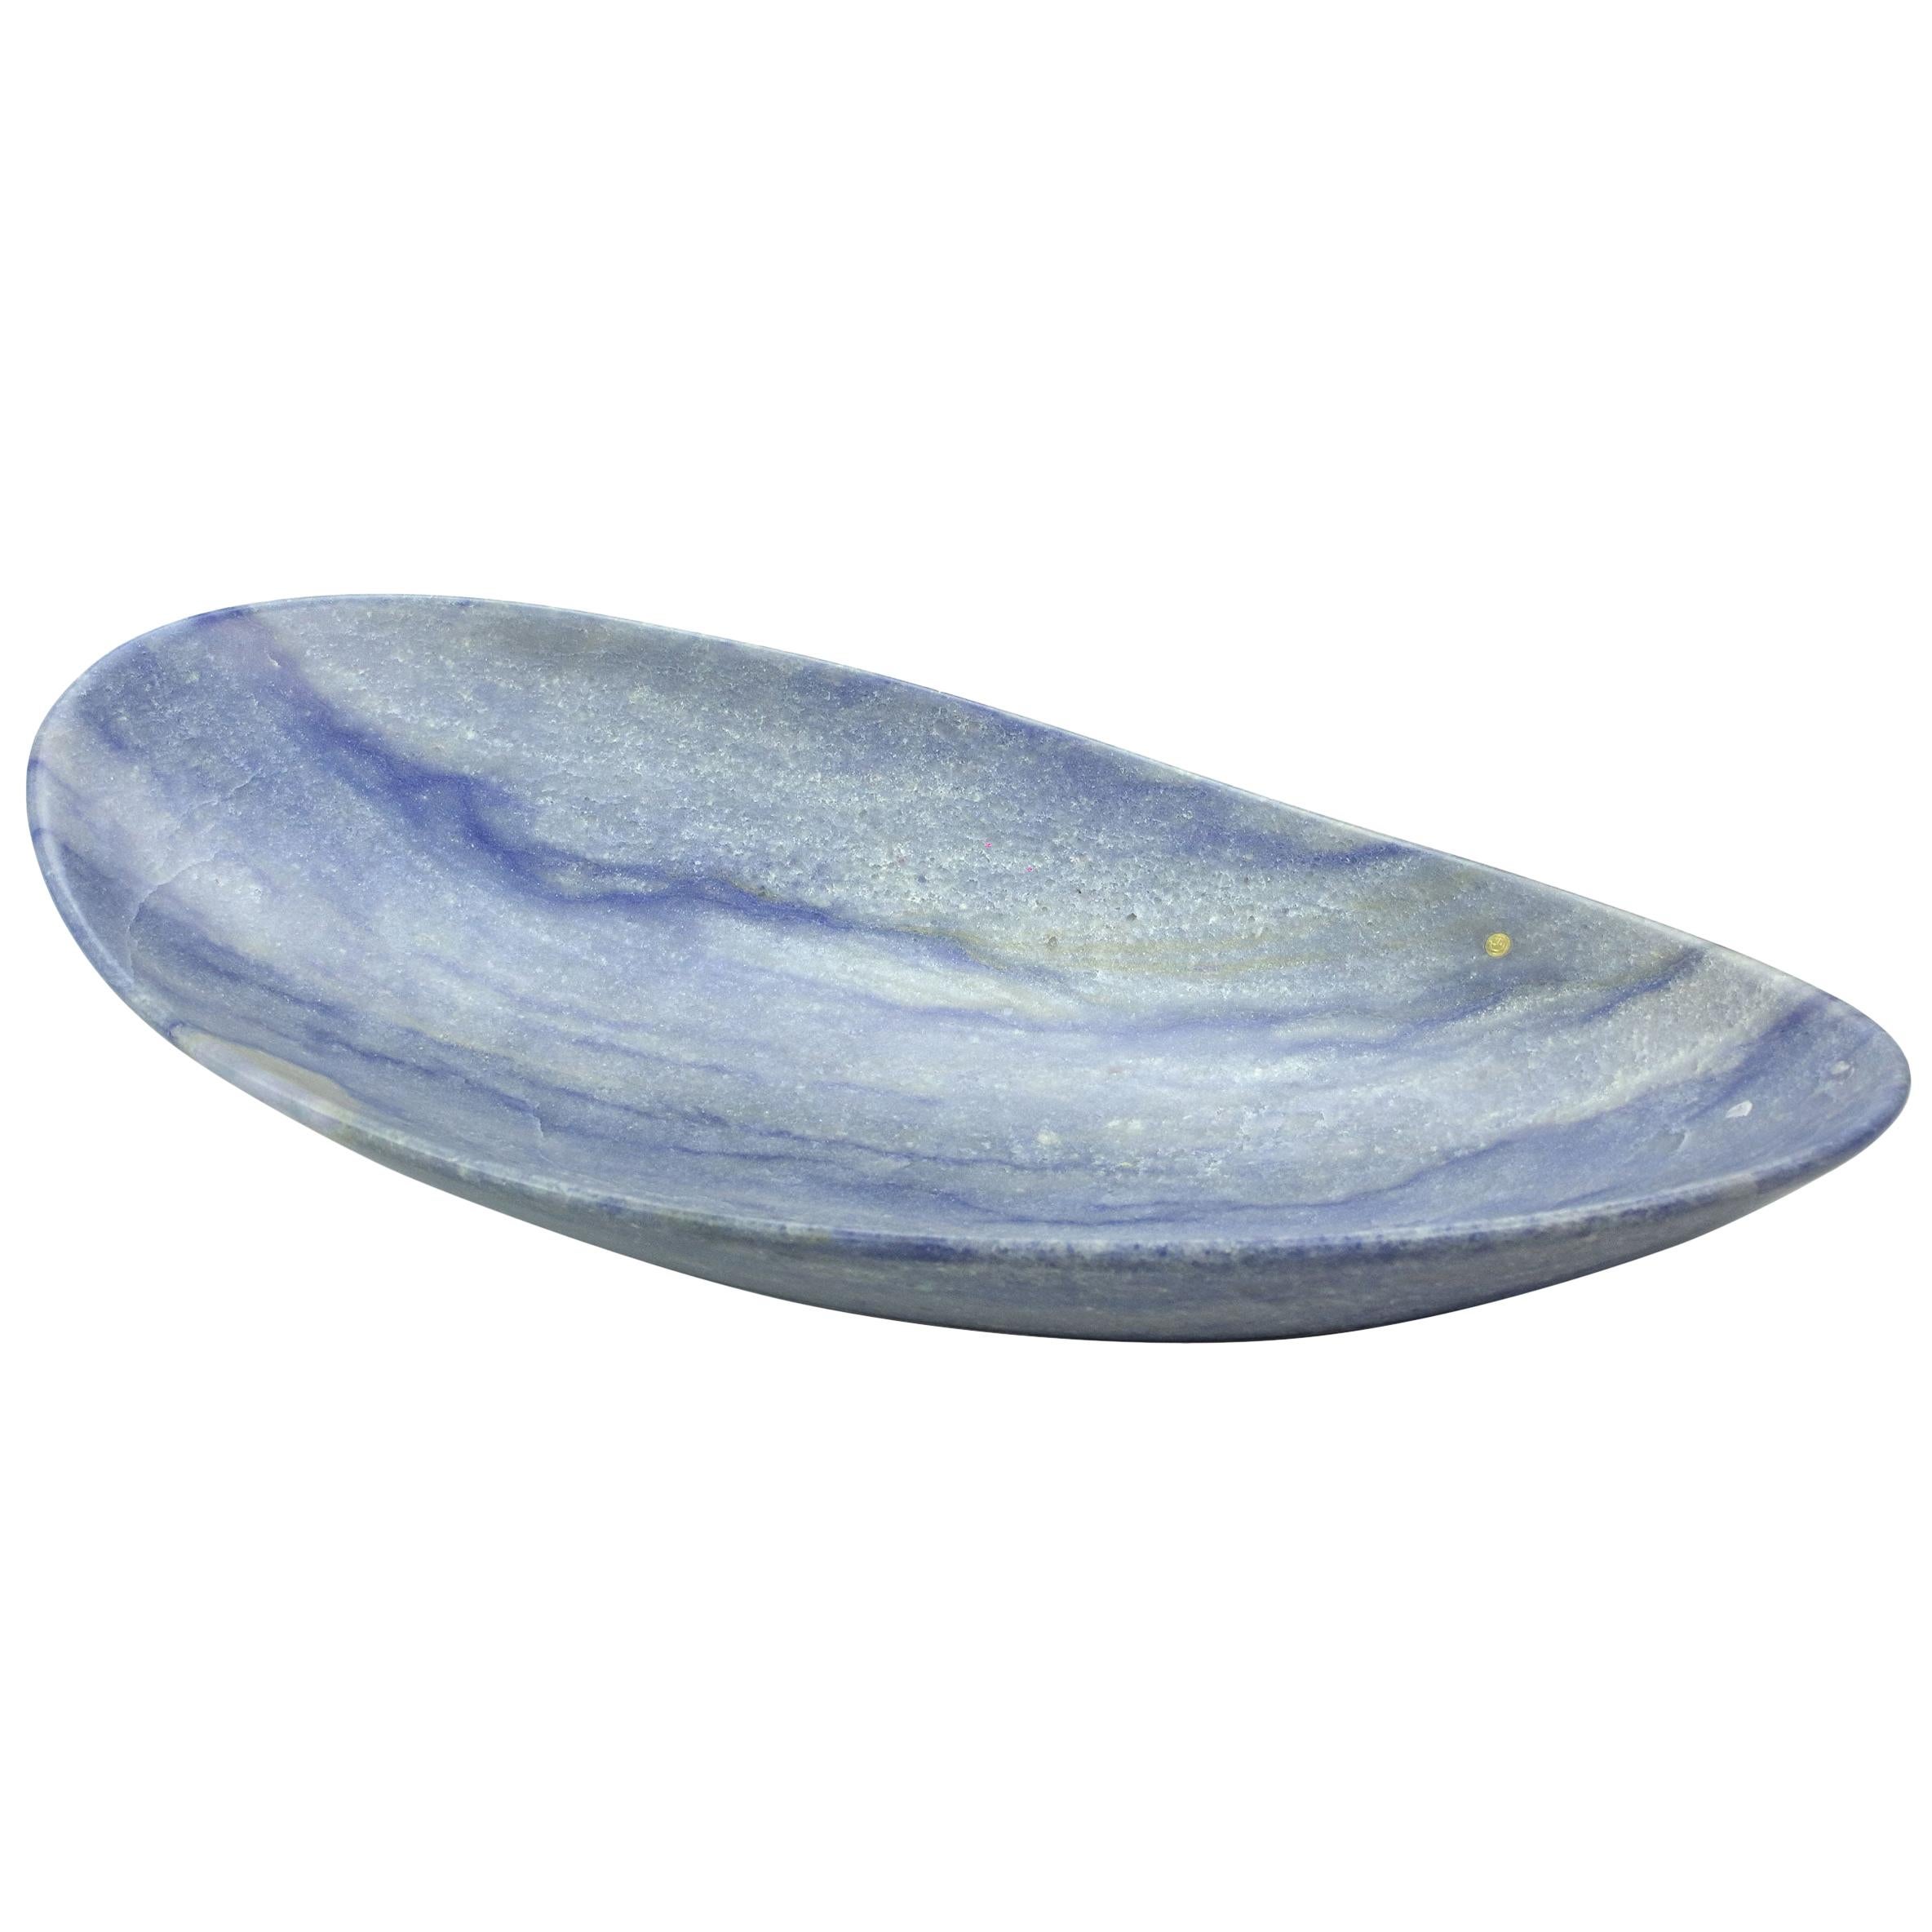 Decorative Bowl Vase Centerpiece Blue Azul Macaubas Marble Collectible Design For Sale